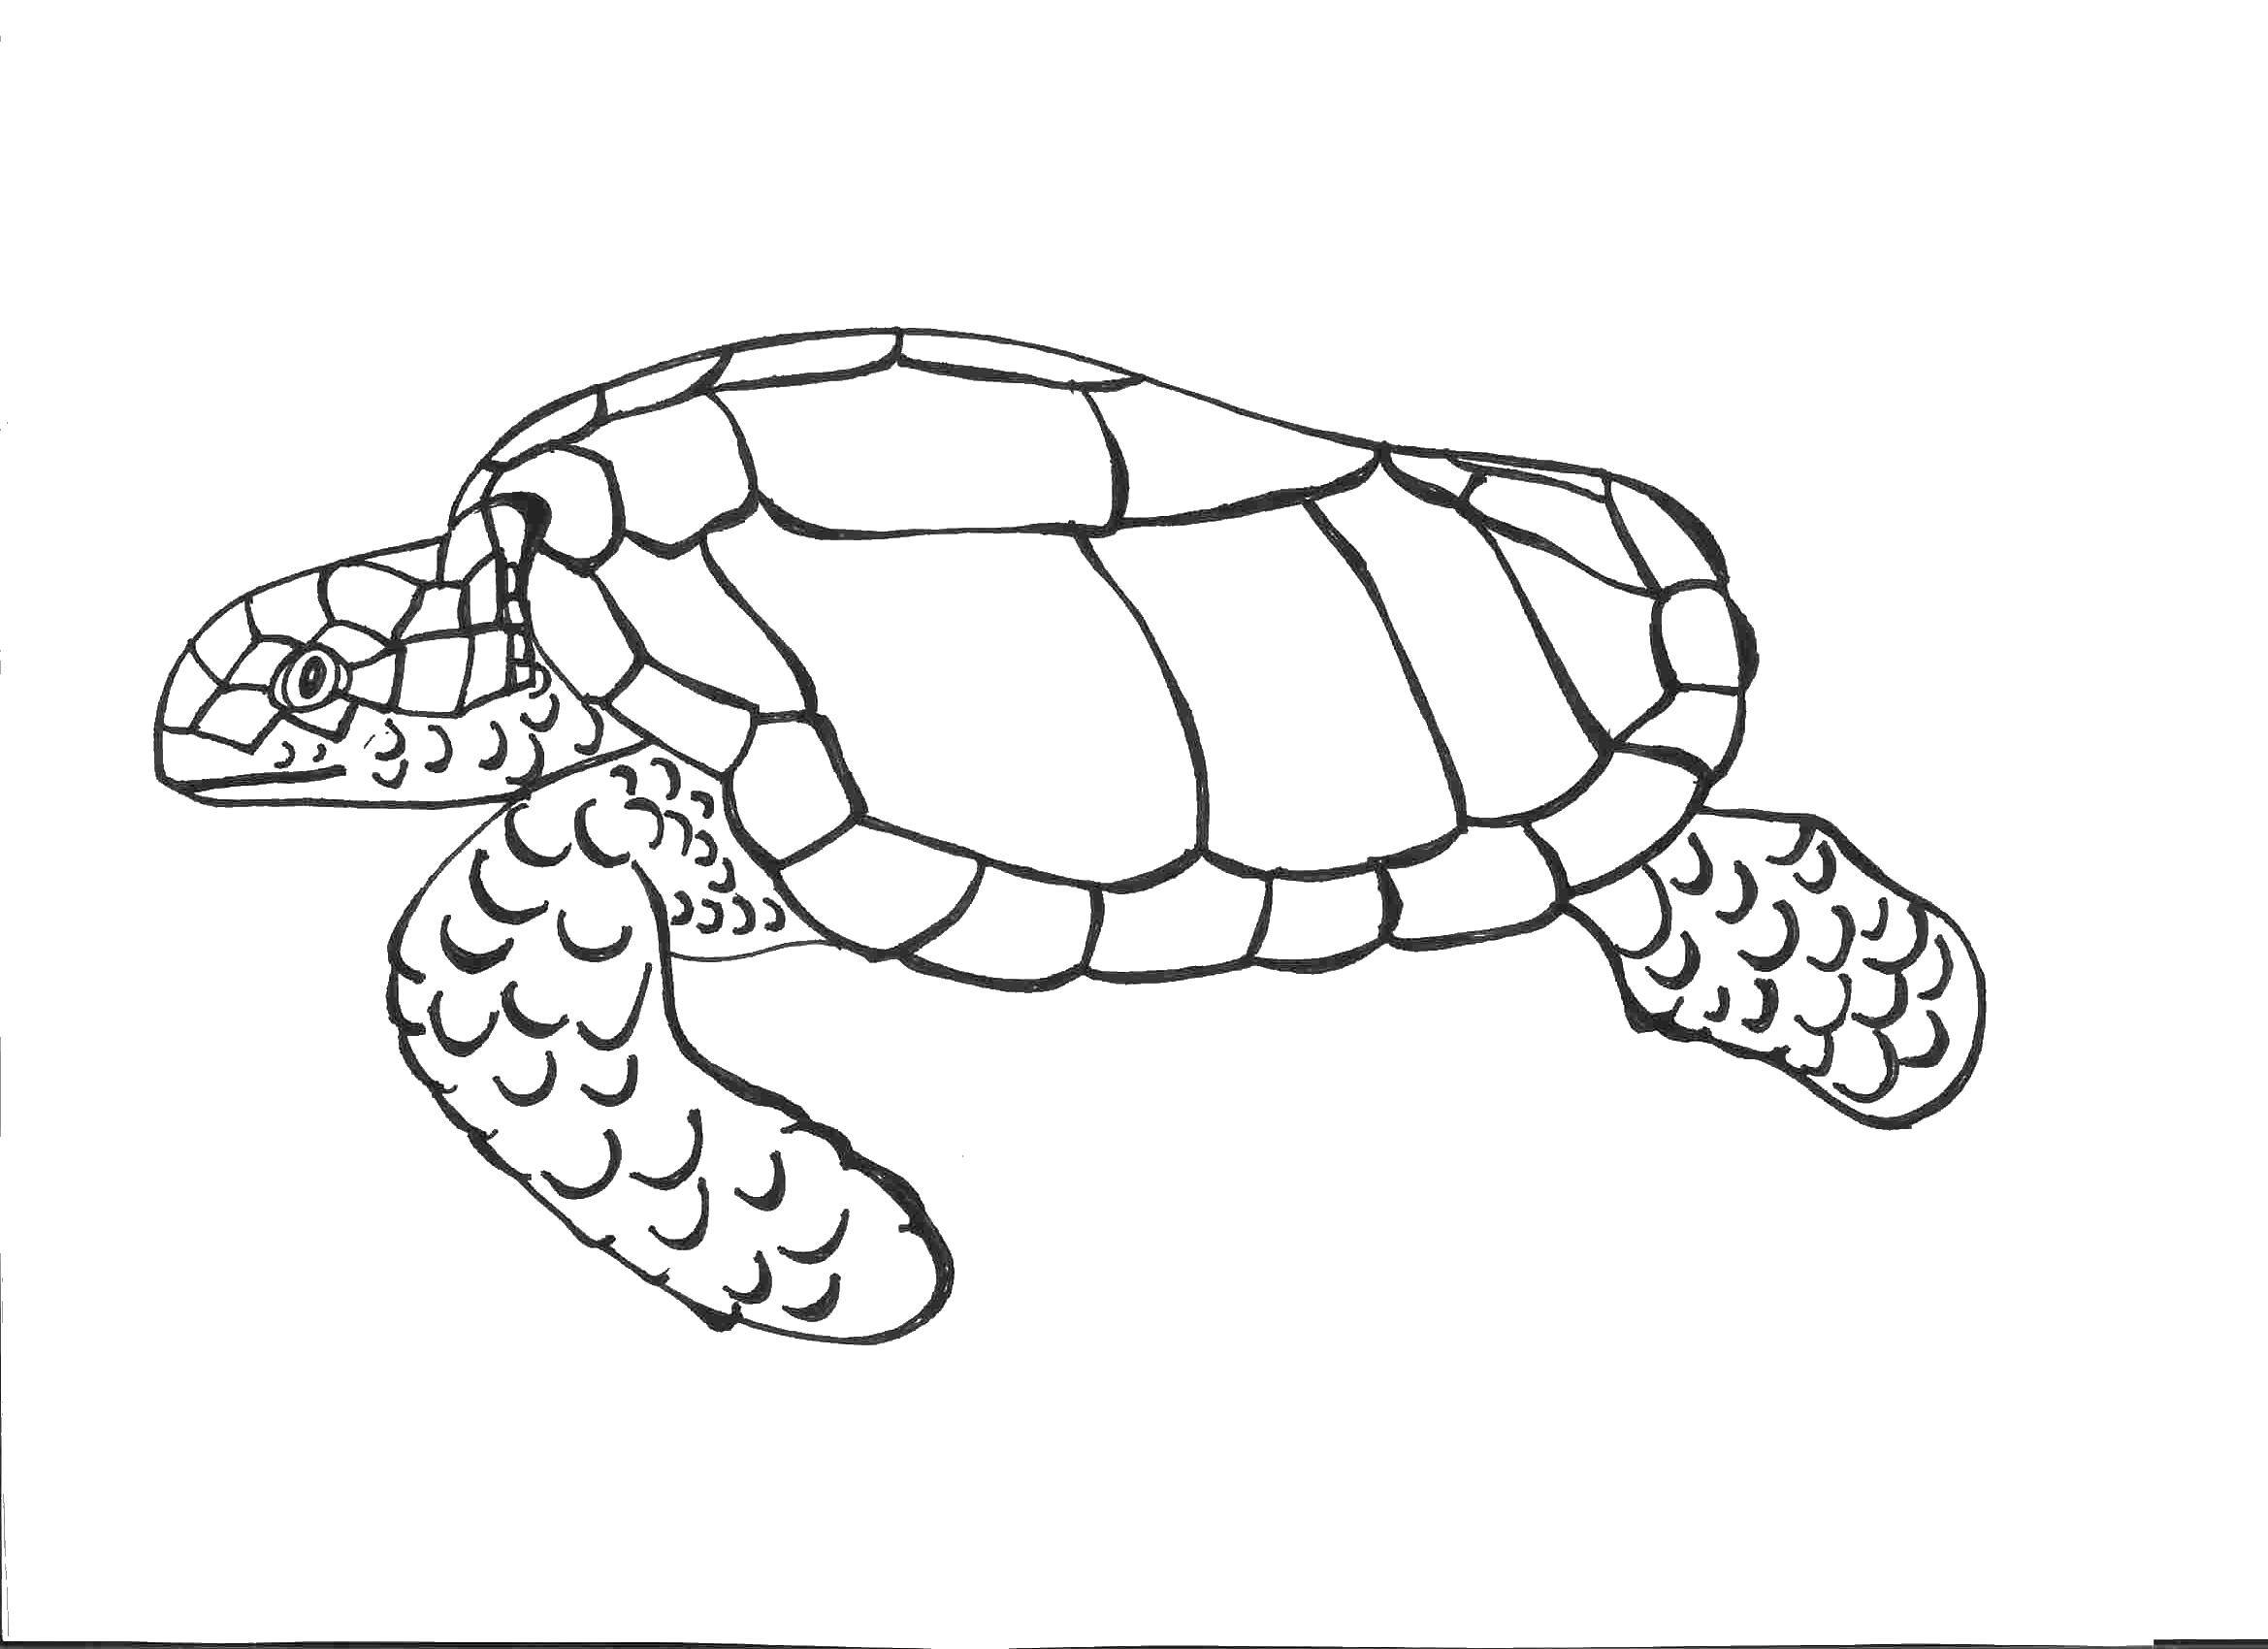 Раскраски Черепаха черепашка  Черепаха ползёт